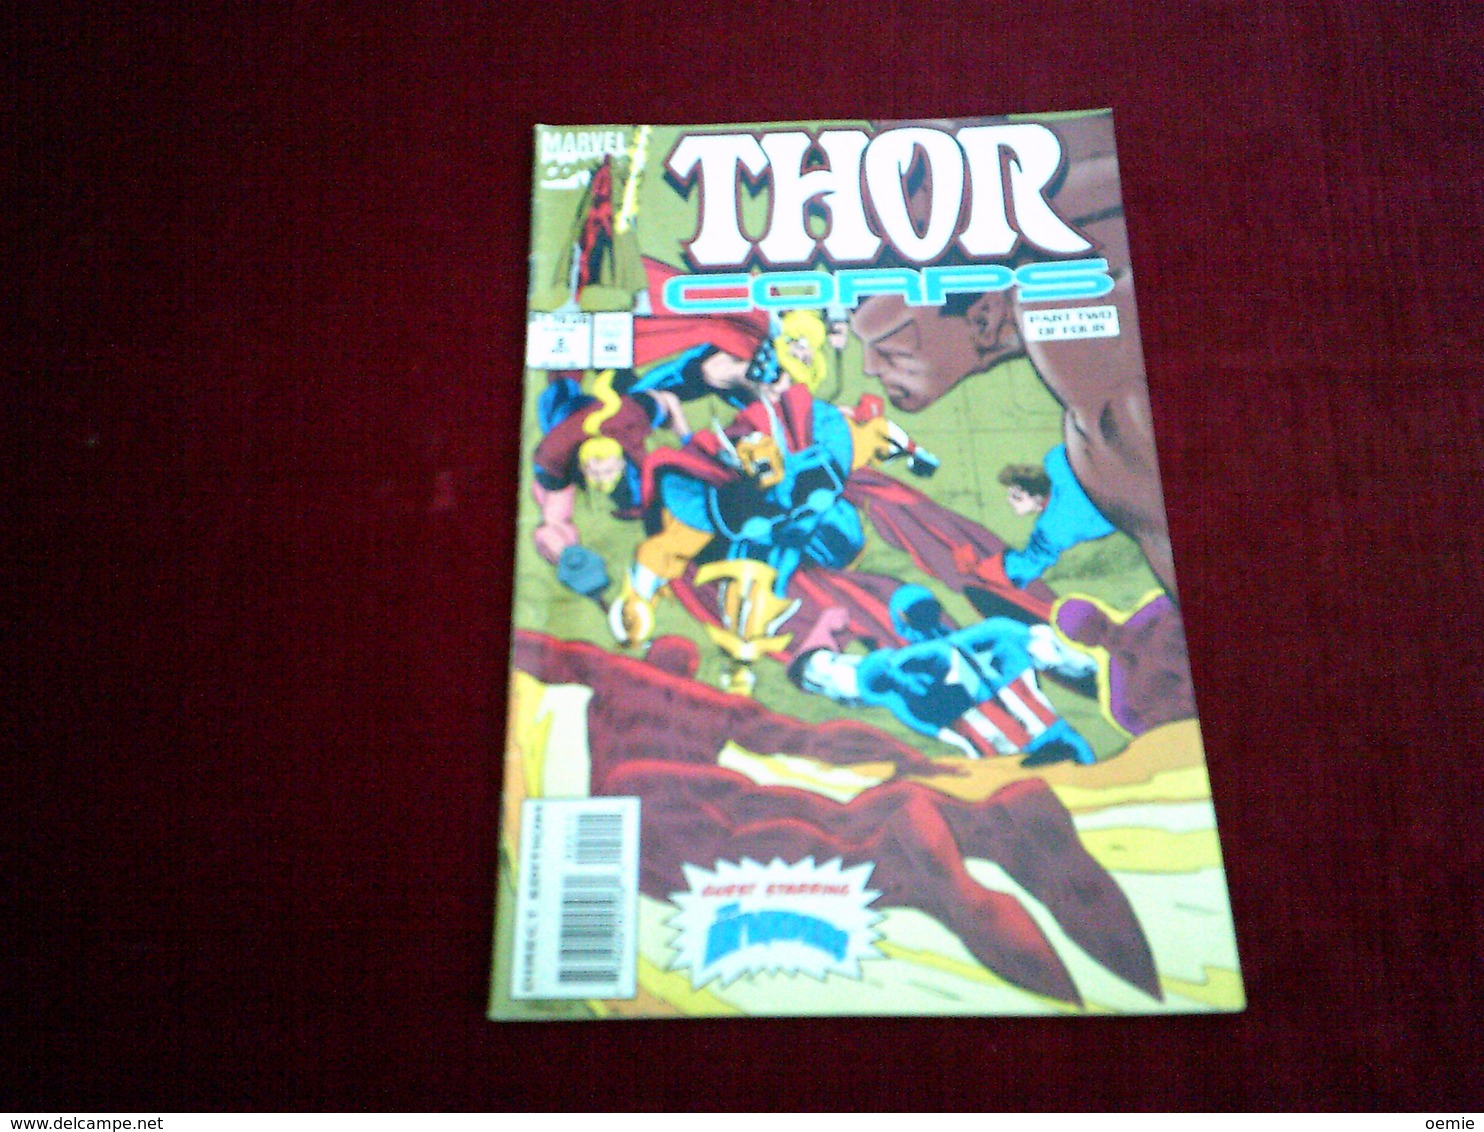 THOR N° 2 CORP - Thor